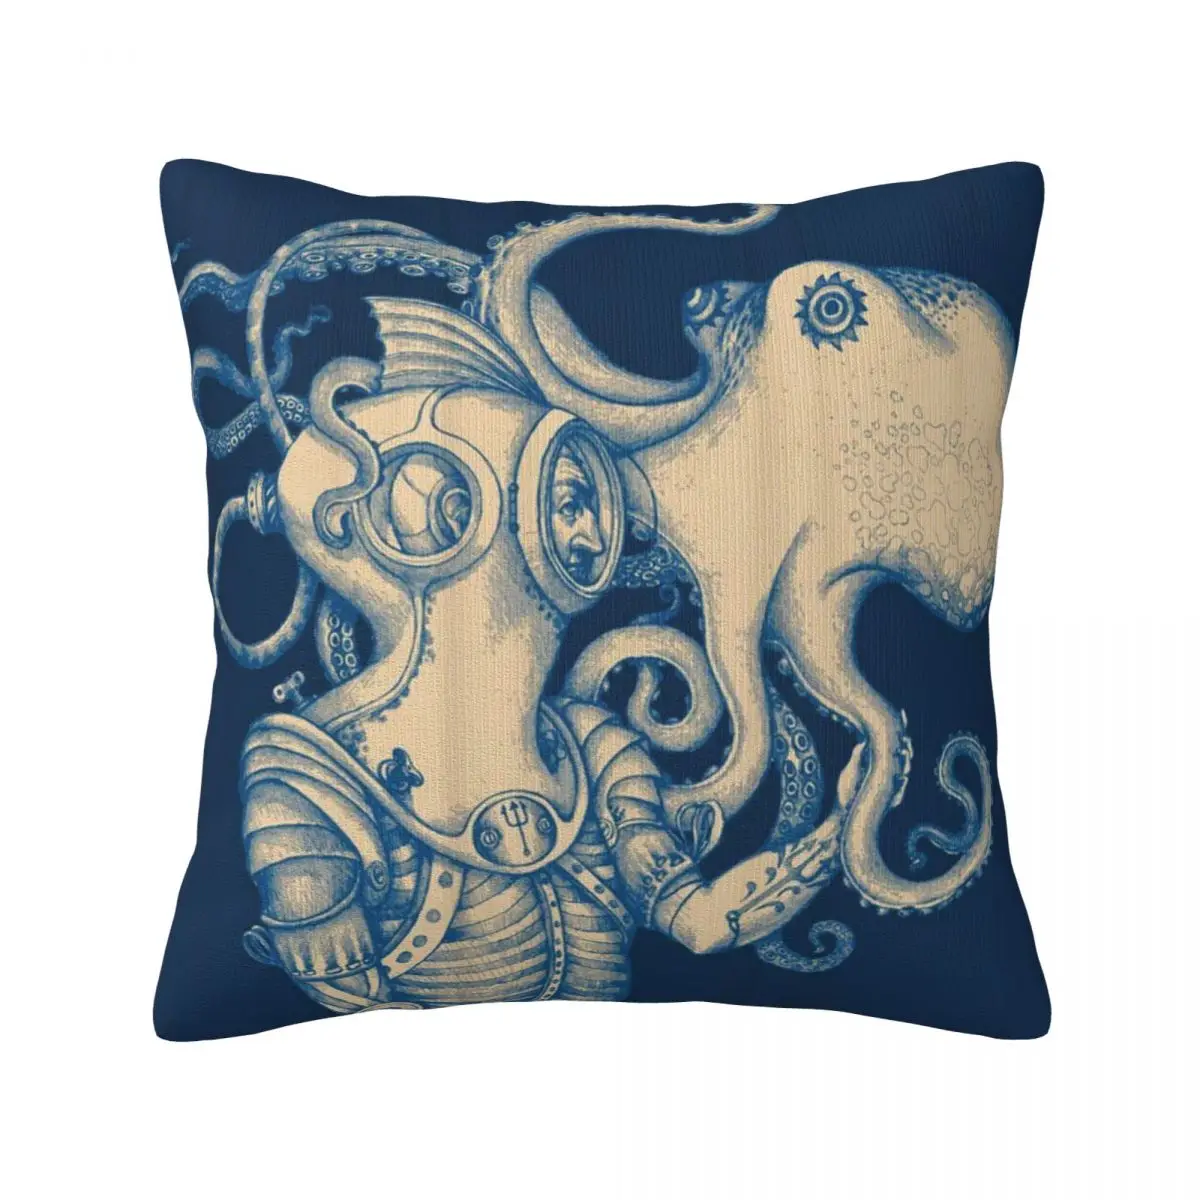 

Octopus Blue Kraken Nautical Throw Pillow Cover Decorative Pillow Covers Home Pillows Shells Cushion Cover Zippered Pillowcase